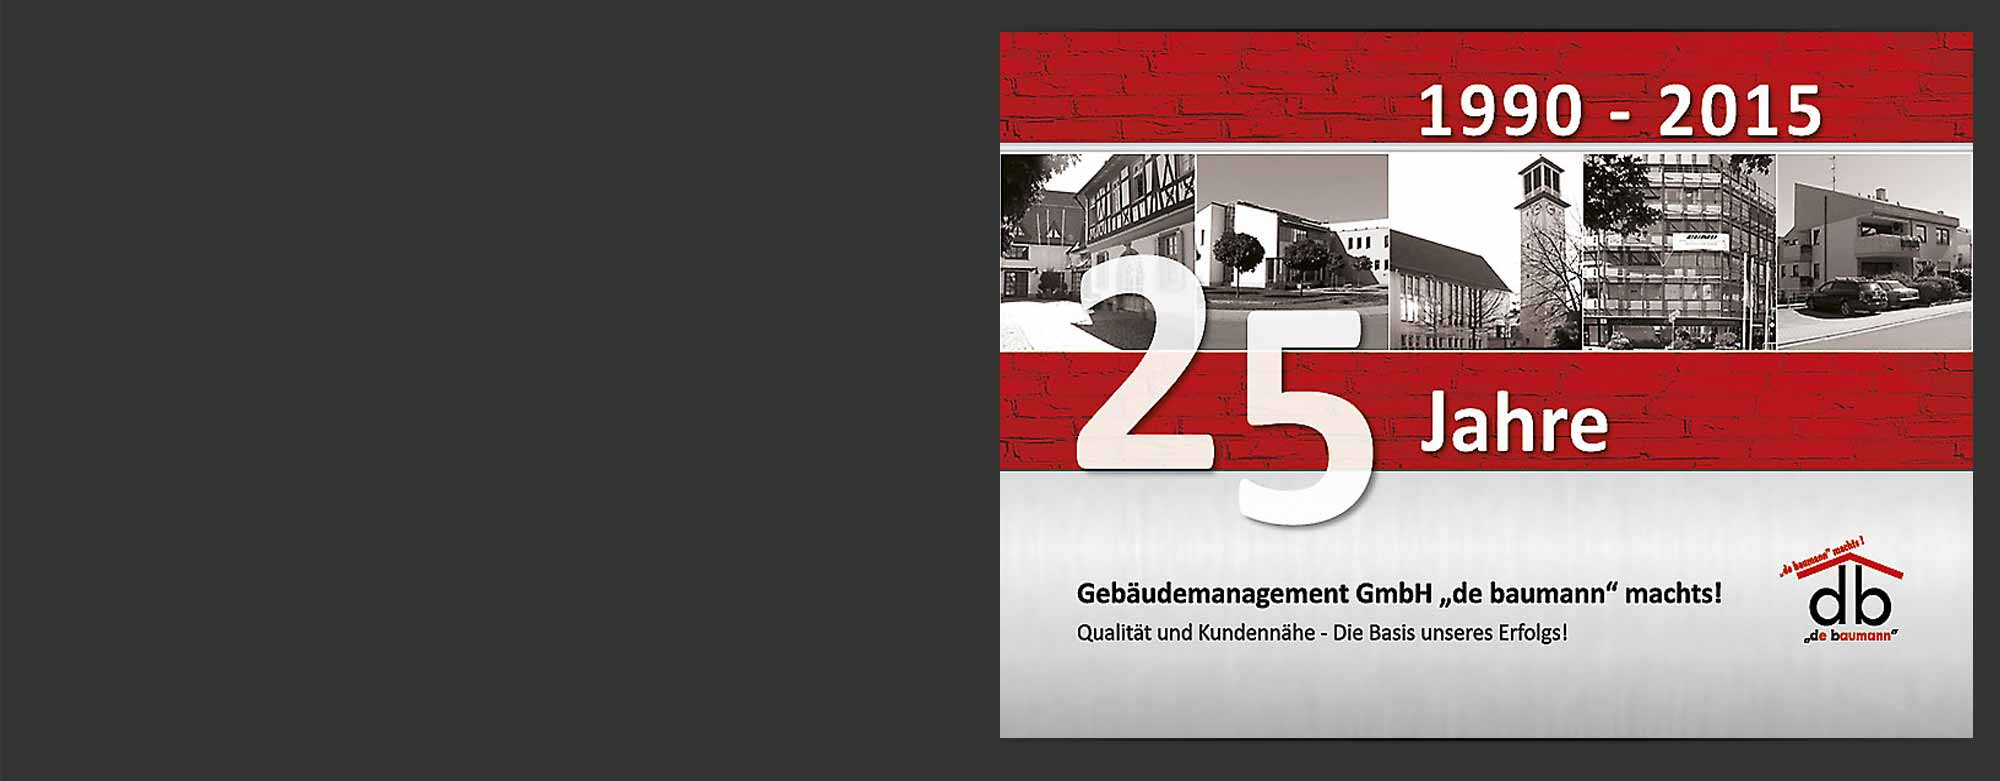 Jubiläumsbroschüre de baumann Gebäudebetreuung GmbH